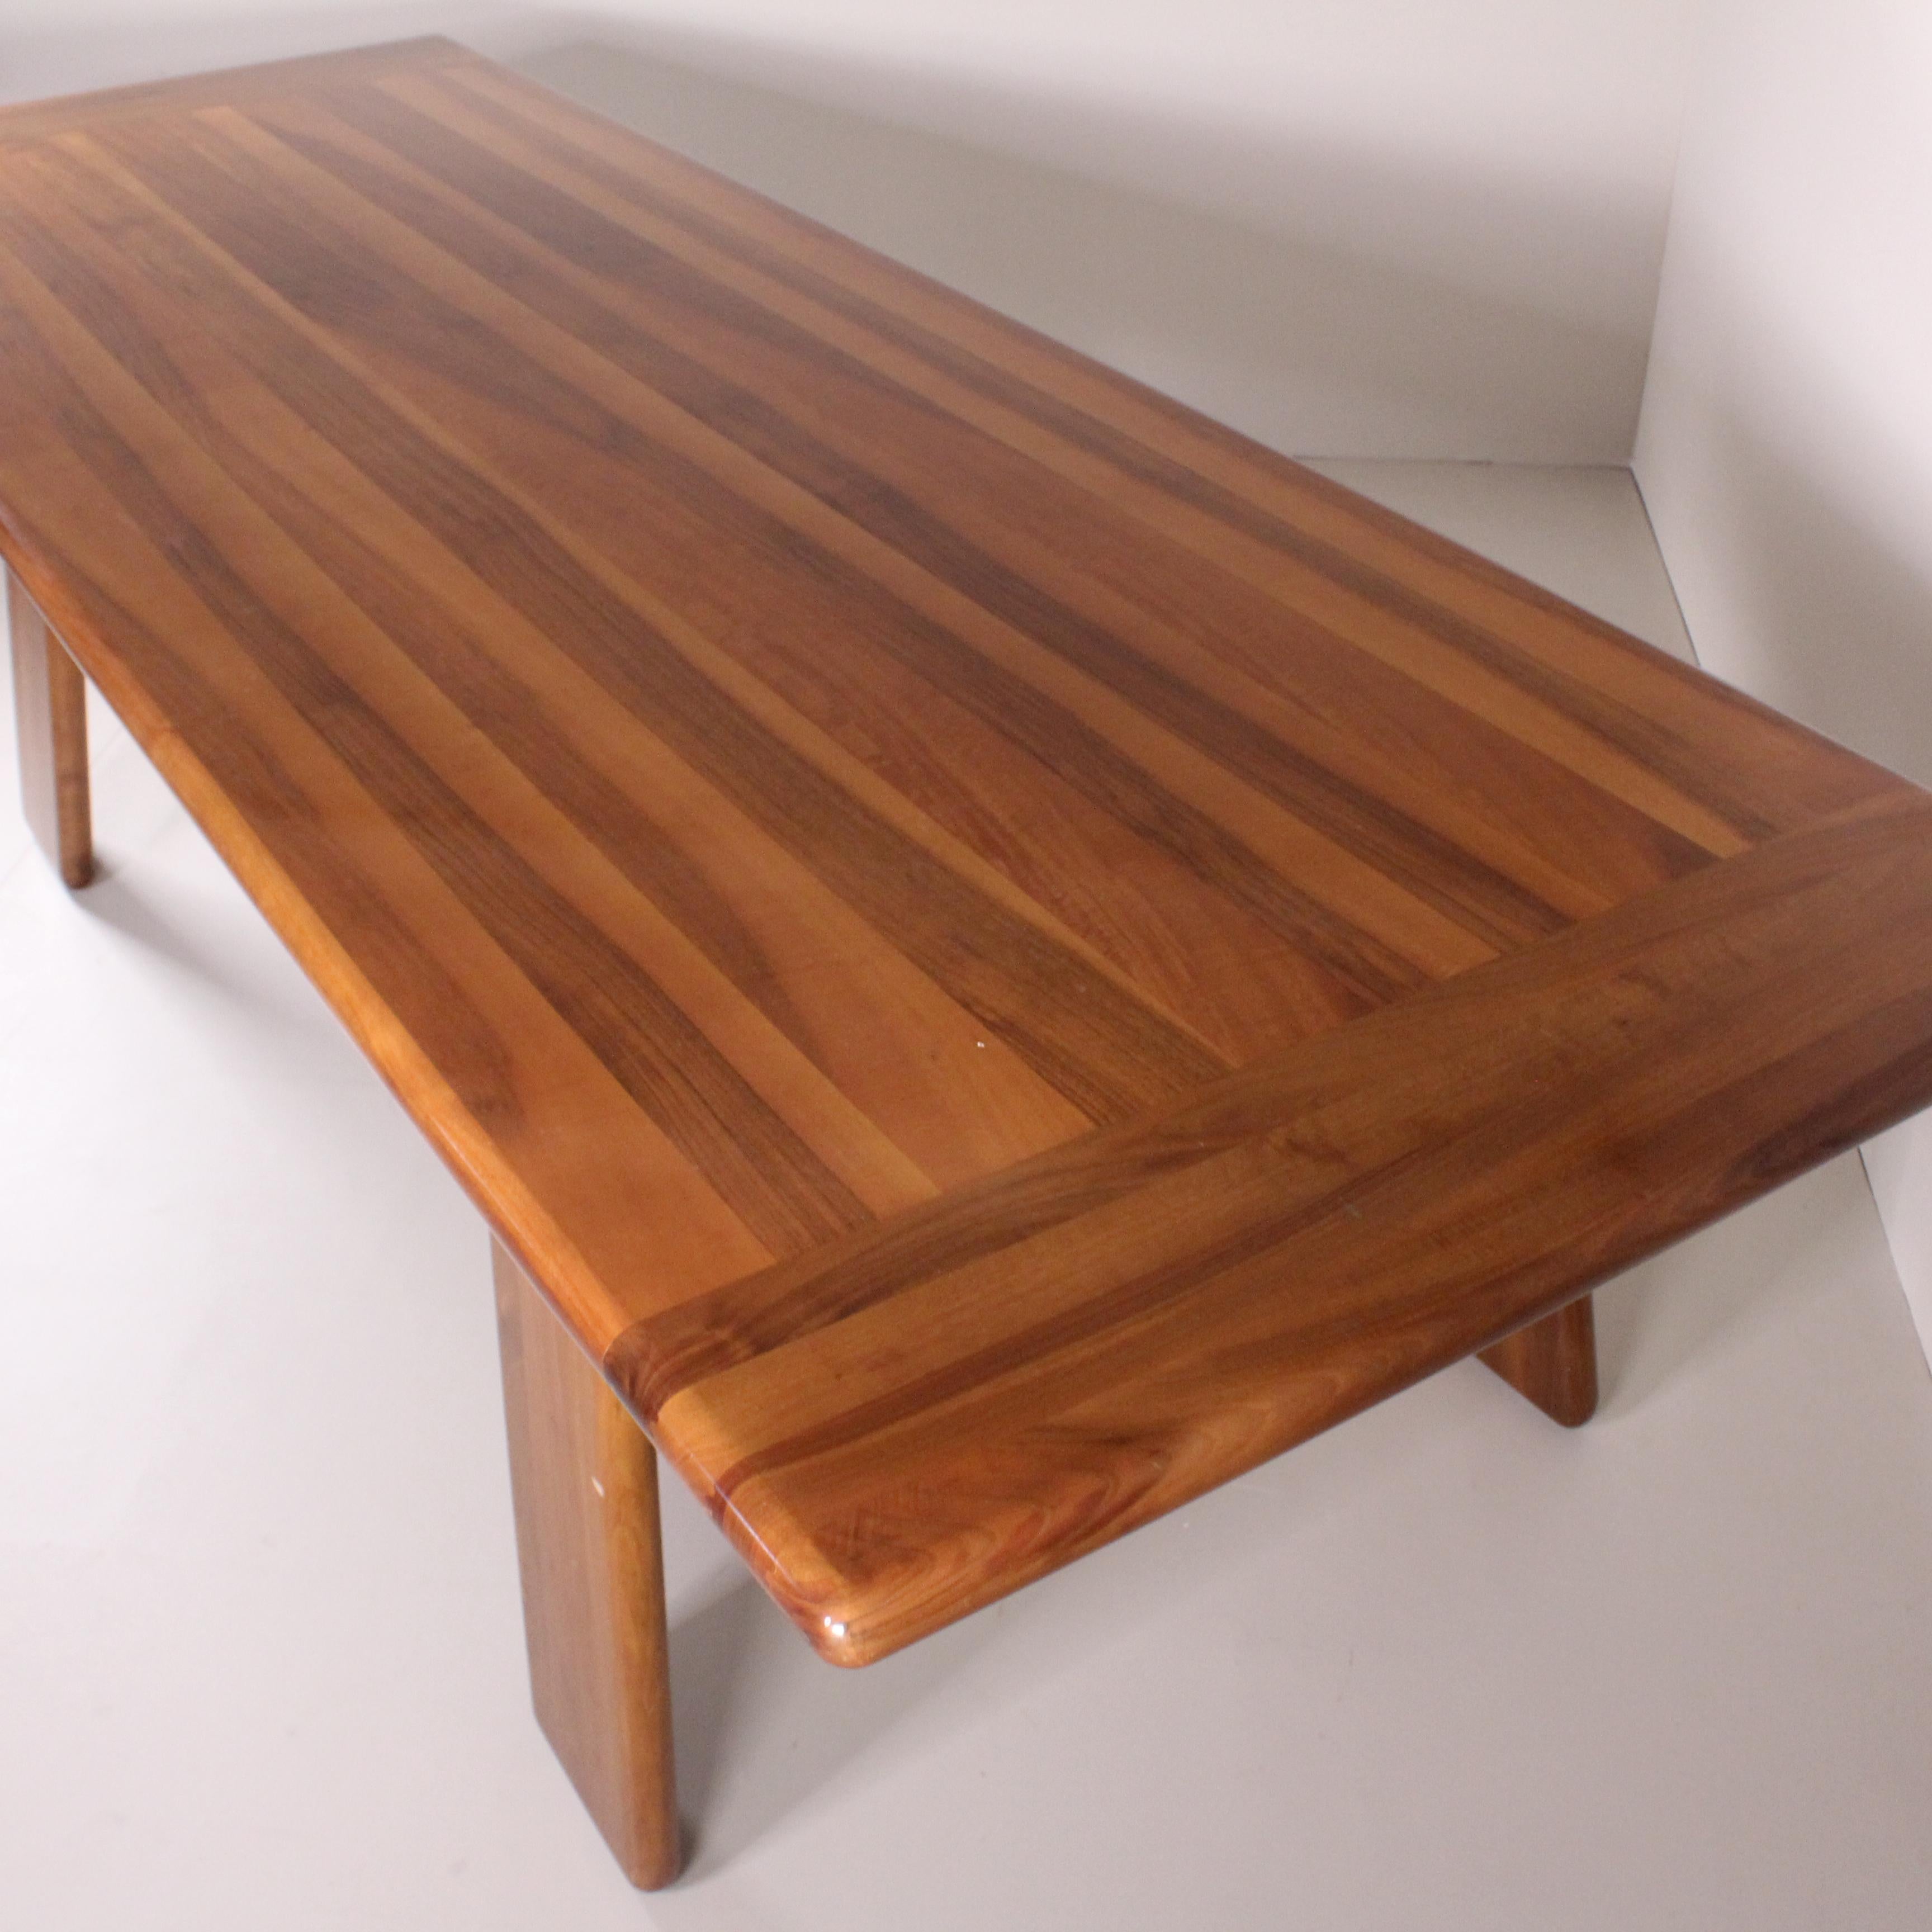 Italian  Wooden table, Mario Marenco, MobilGirgi, 1960 For Sale